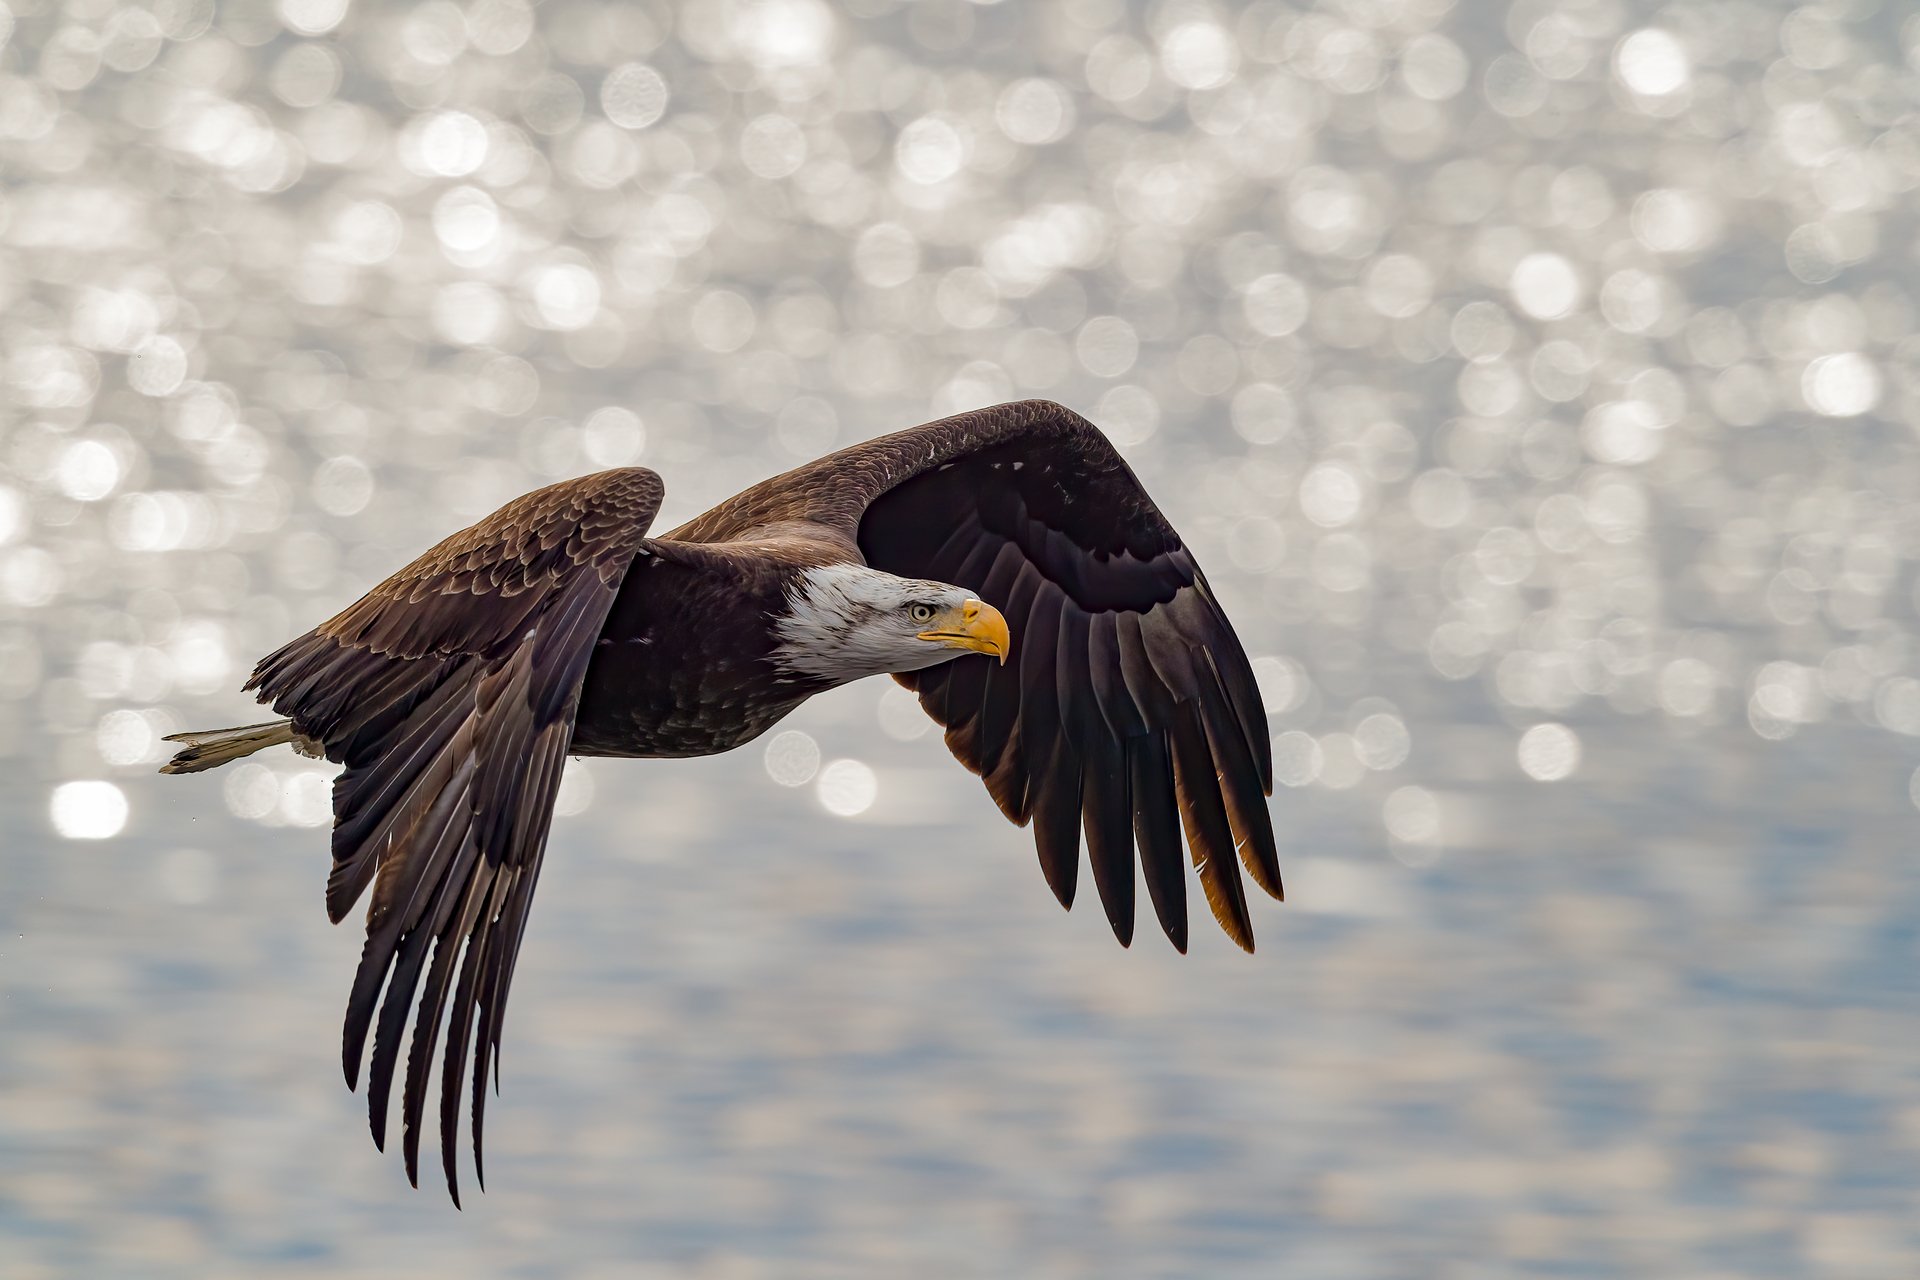 Bald eagle soaring over water